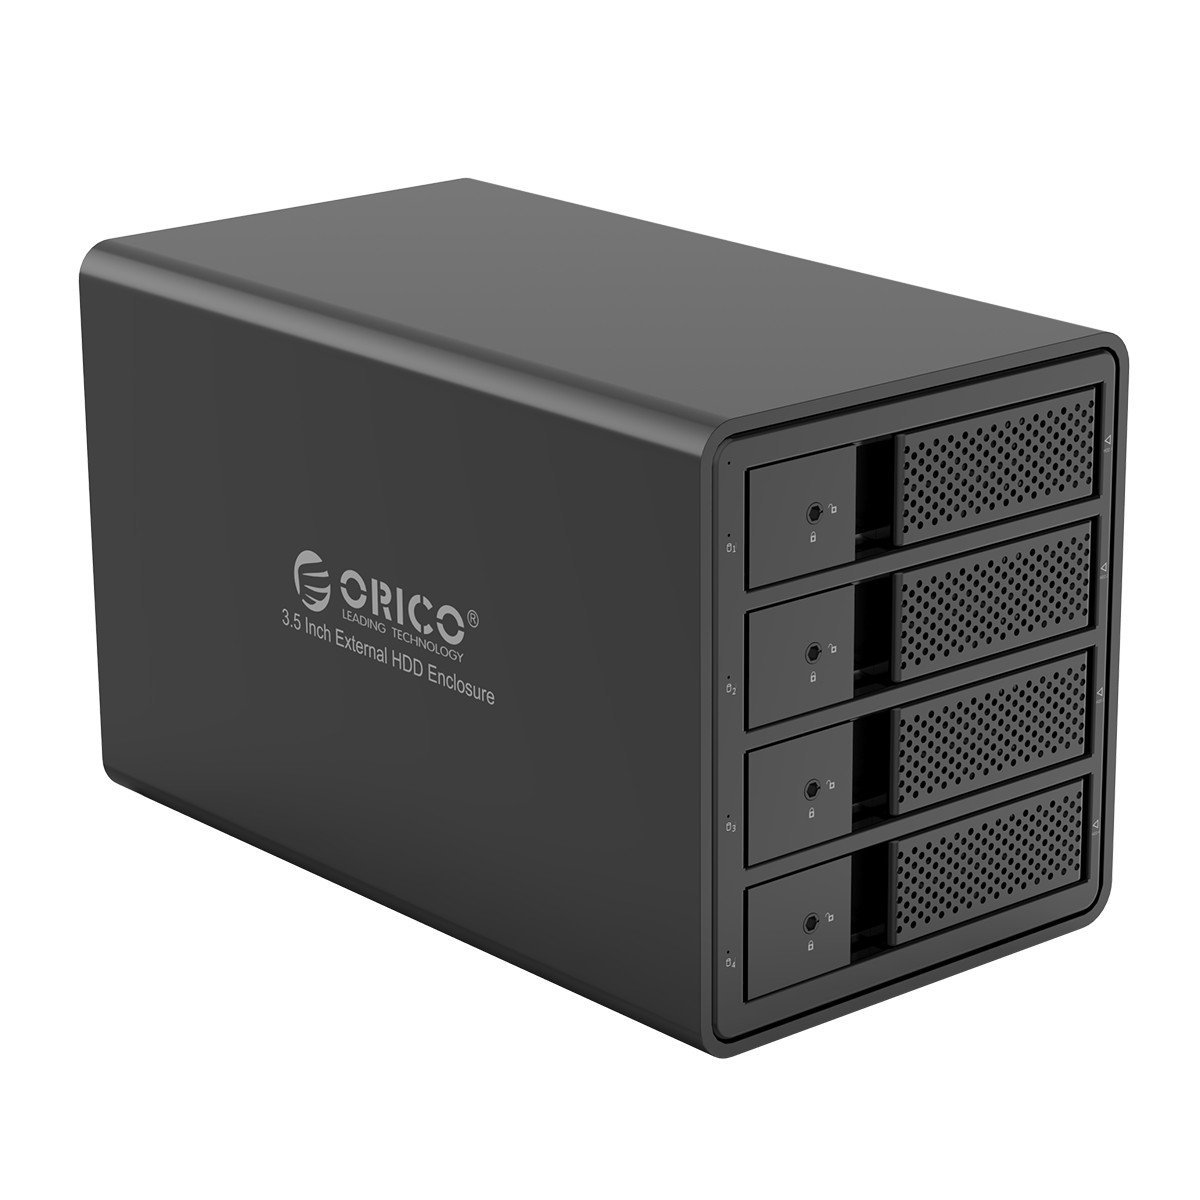 Hard Drive Enclosure Orico HDD,3.5 Inch,4 Bay,USB 3.0 type B